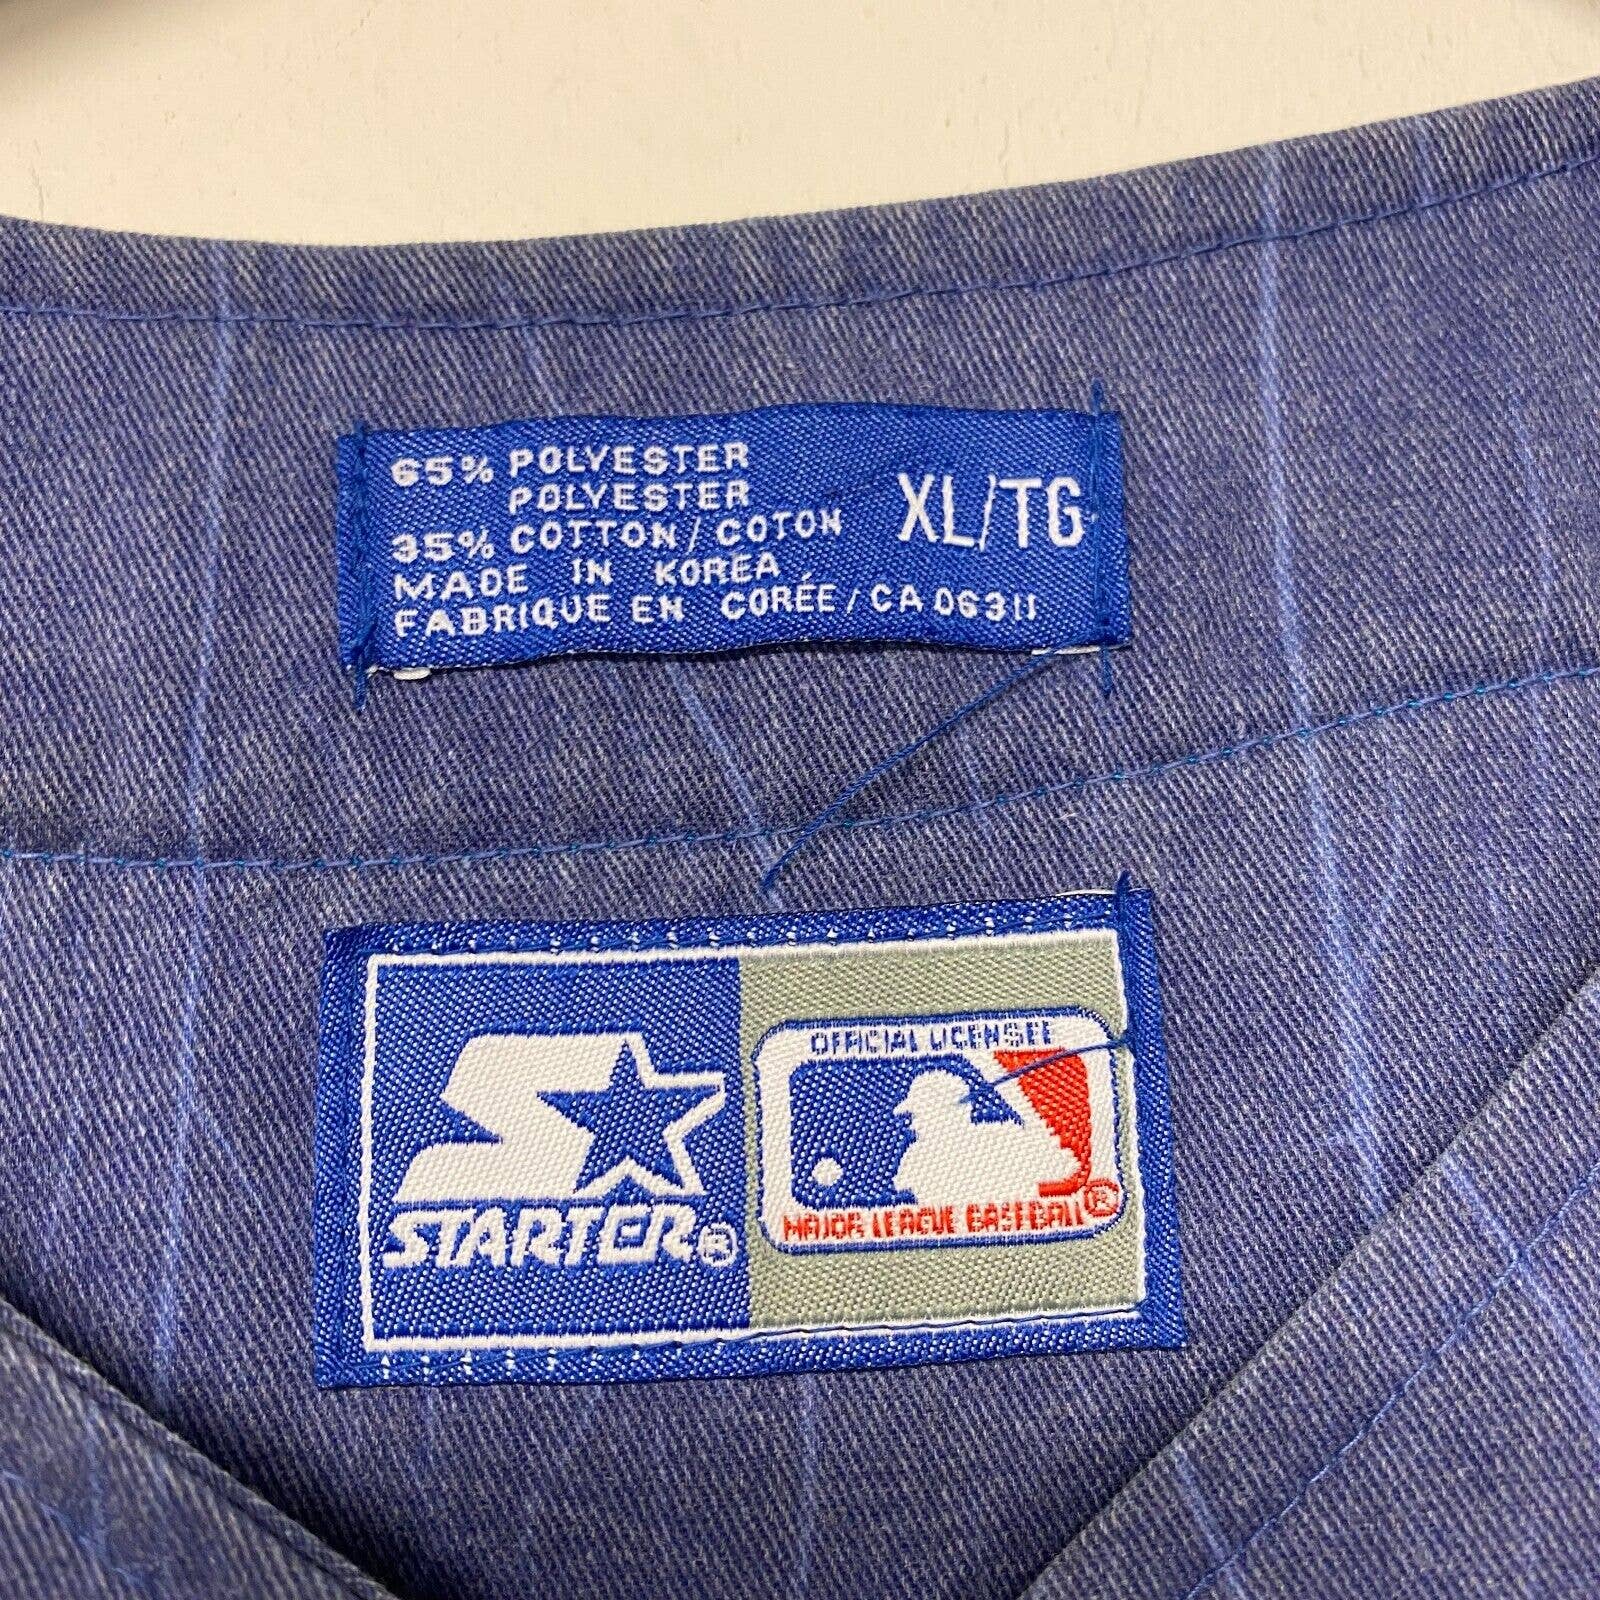 MLB Blue Jays Starter Jersey T-shirt Size XL